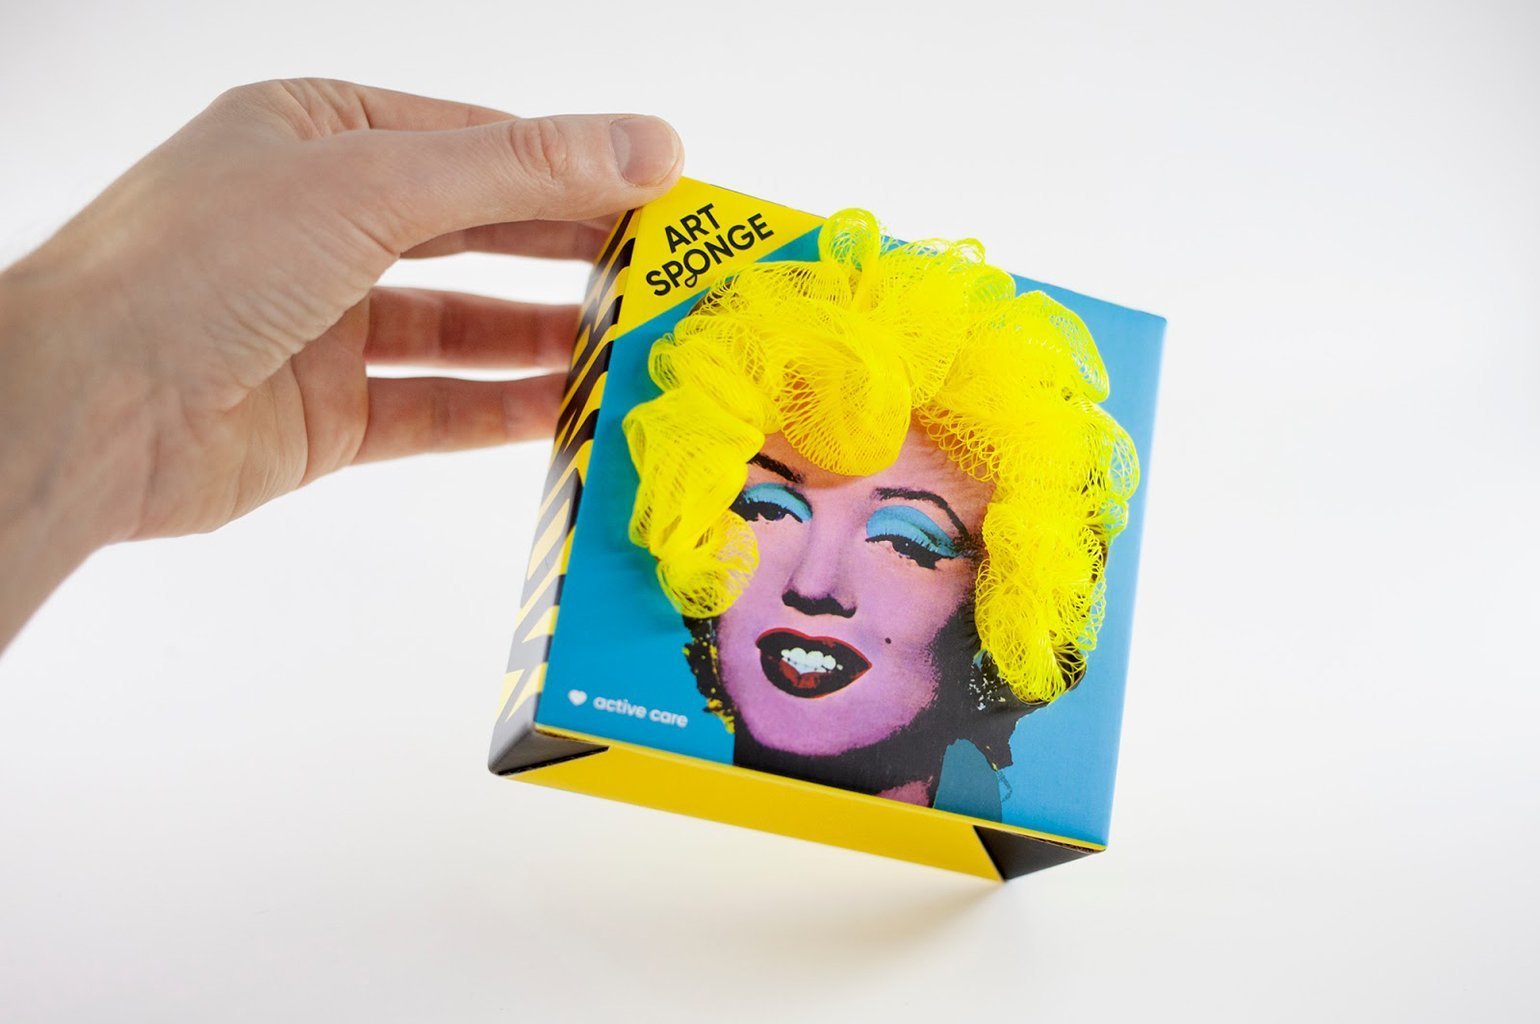 Дизайн упаковки мочалок для тела. На голубой коробке изображена Мэрилин Монро, а мочалка имитирует её волосы